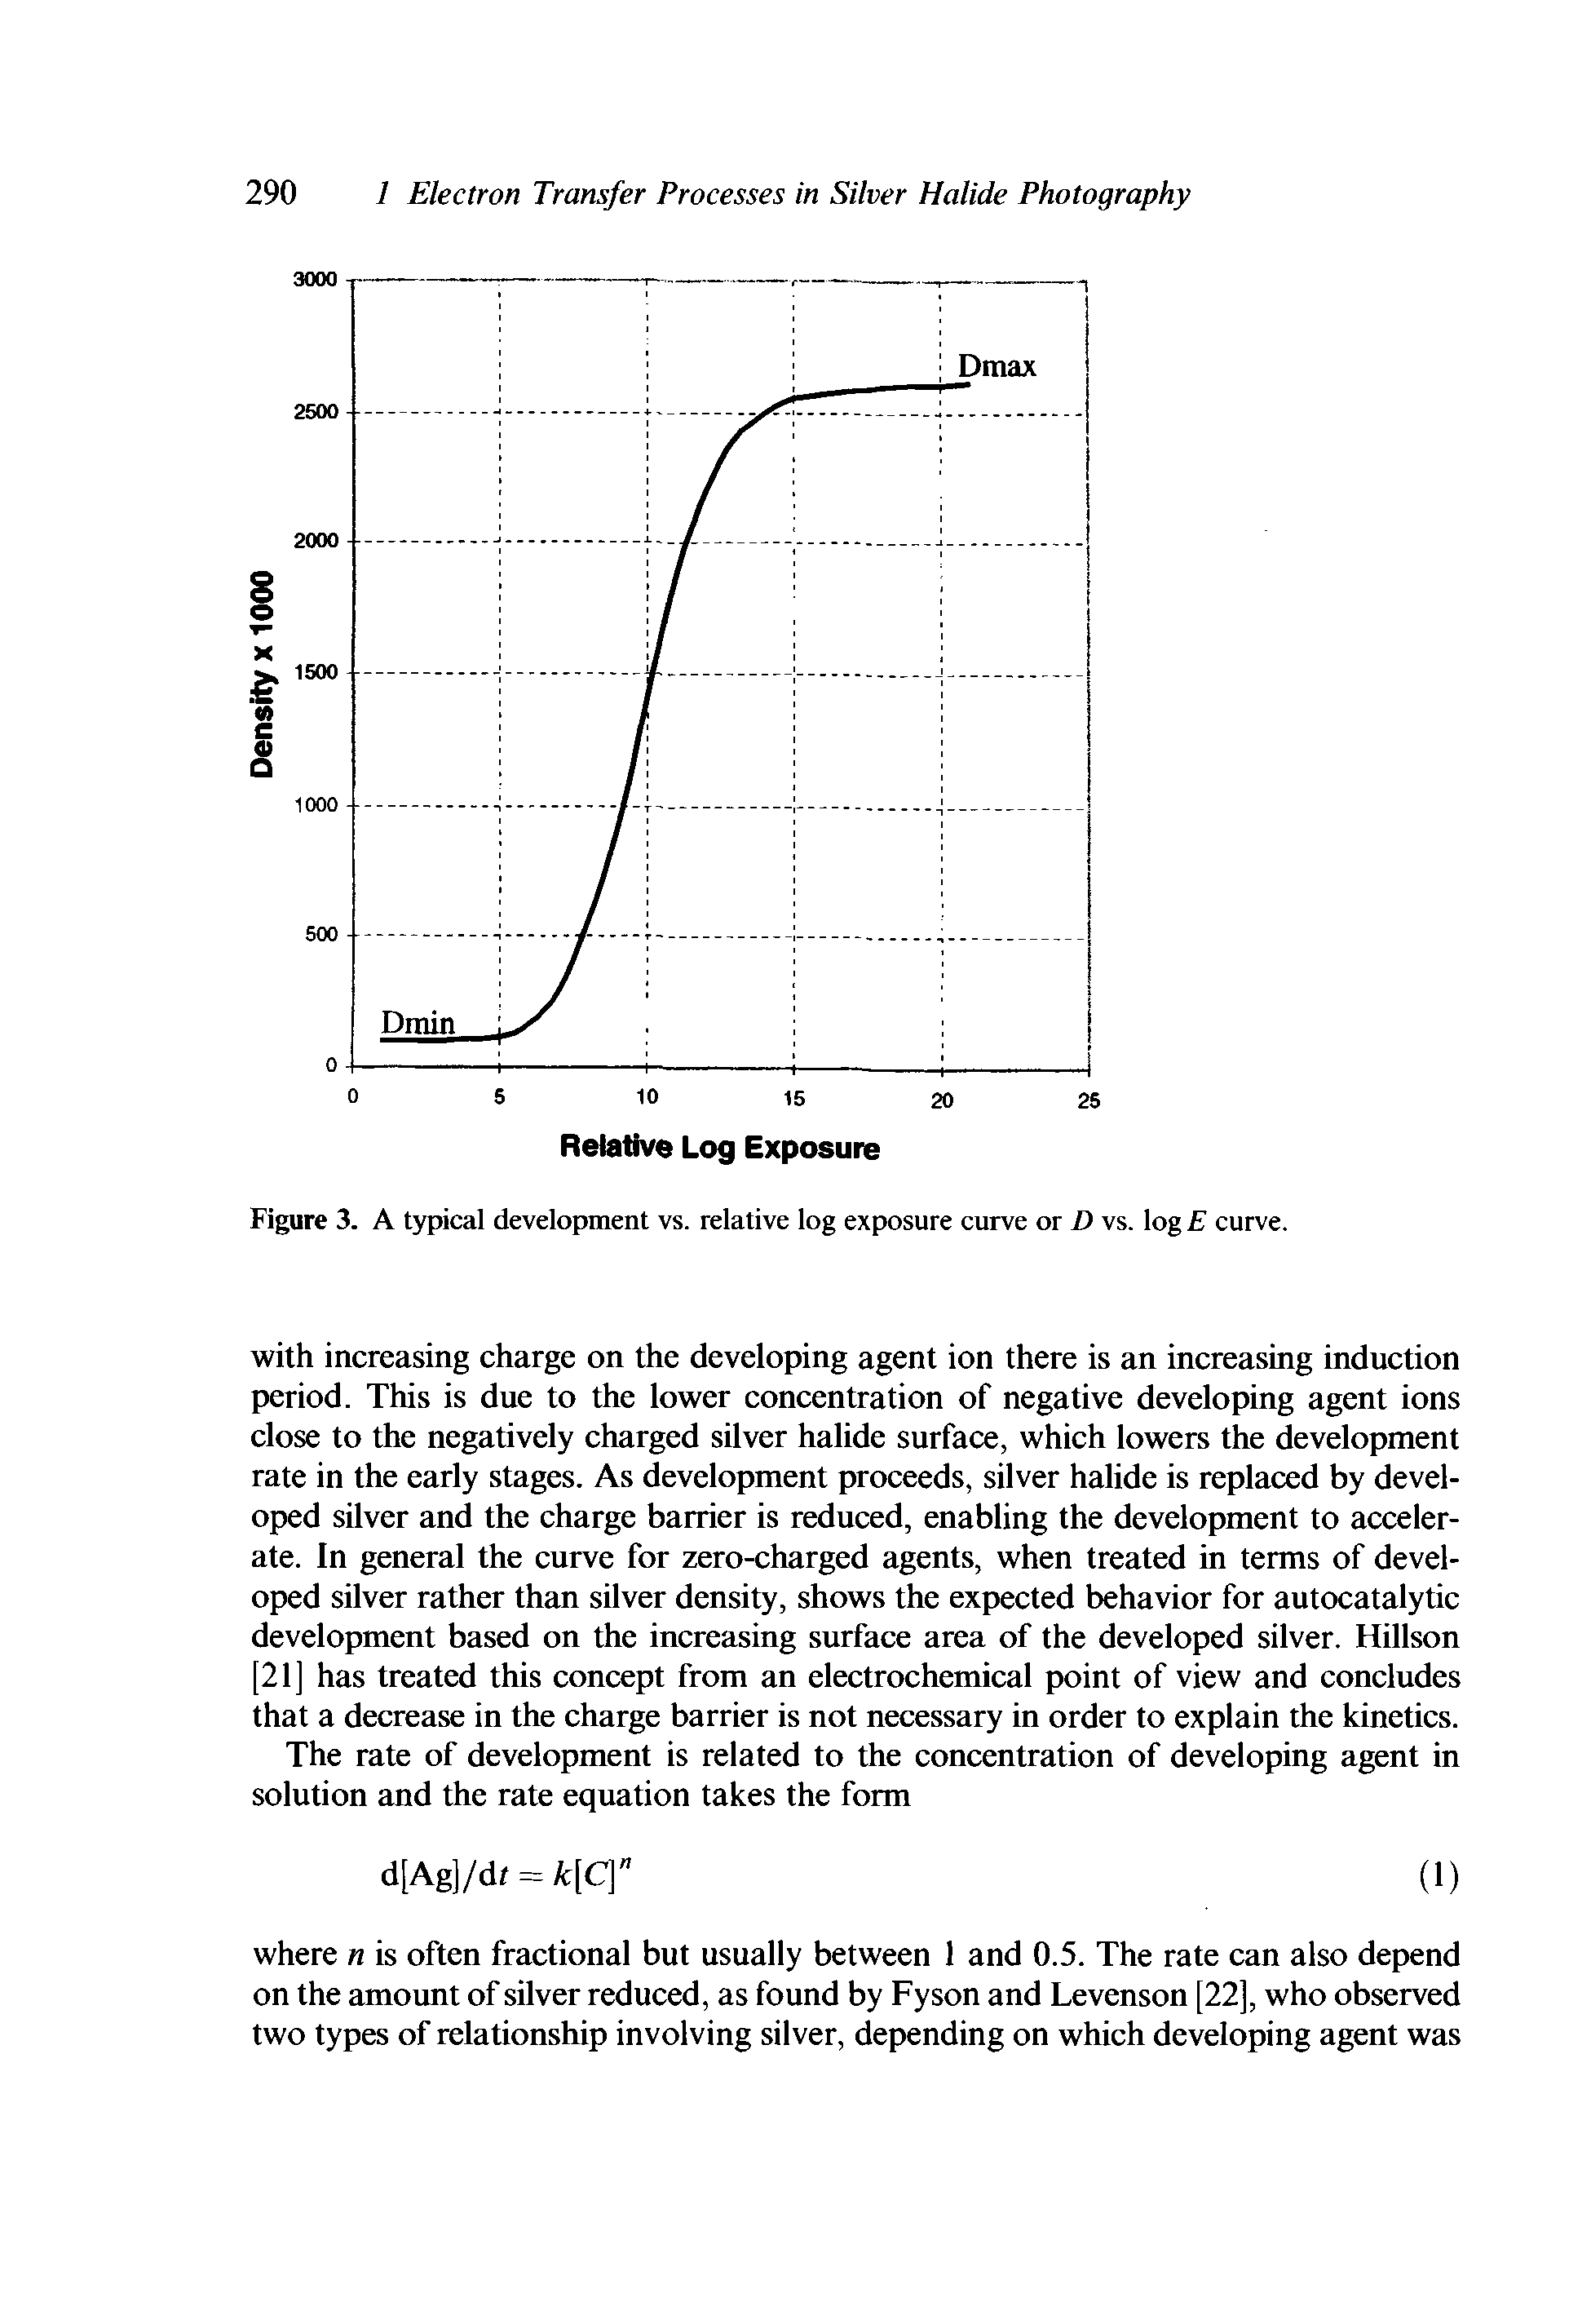 Figure 3. A typical development vs. relative log exposure curve or D vs. log E curve.